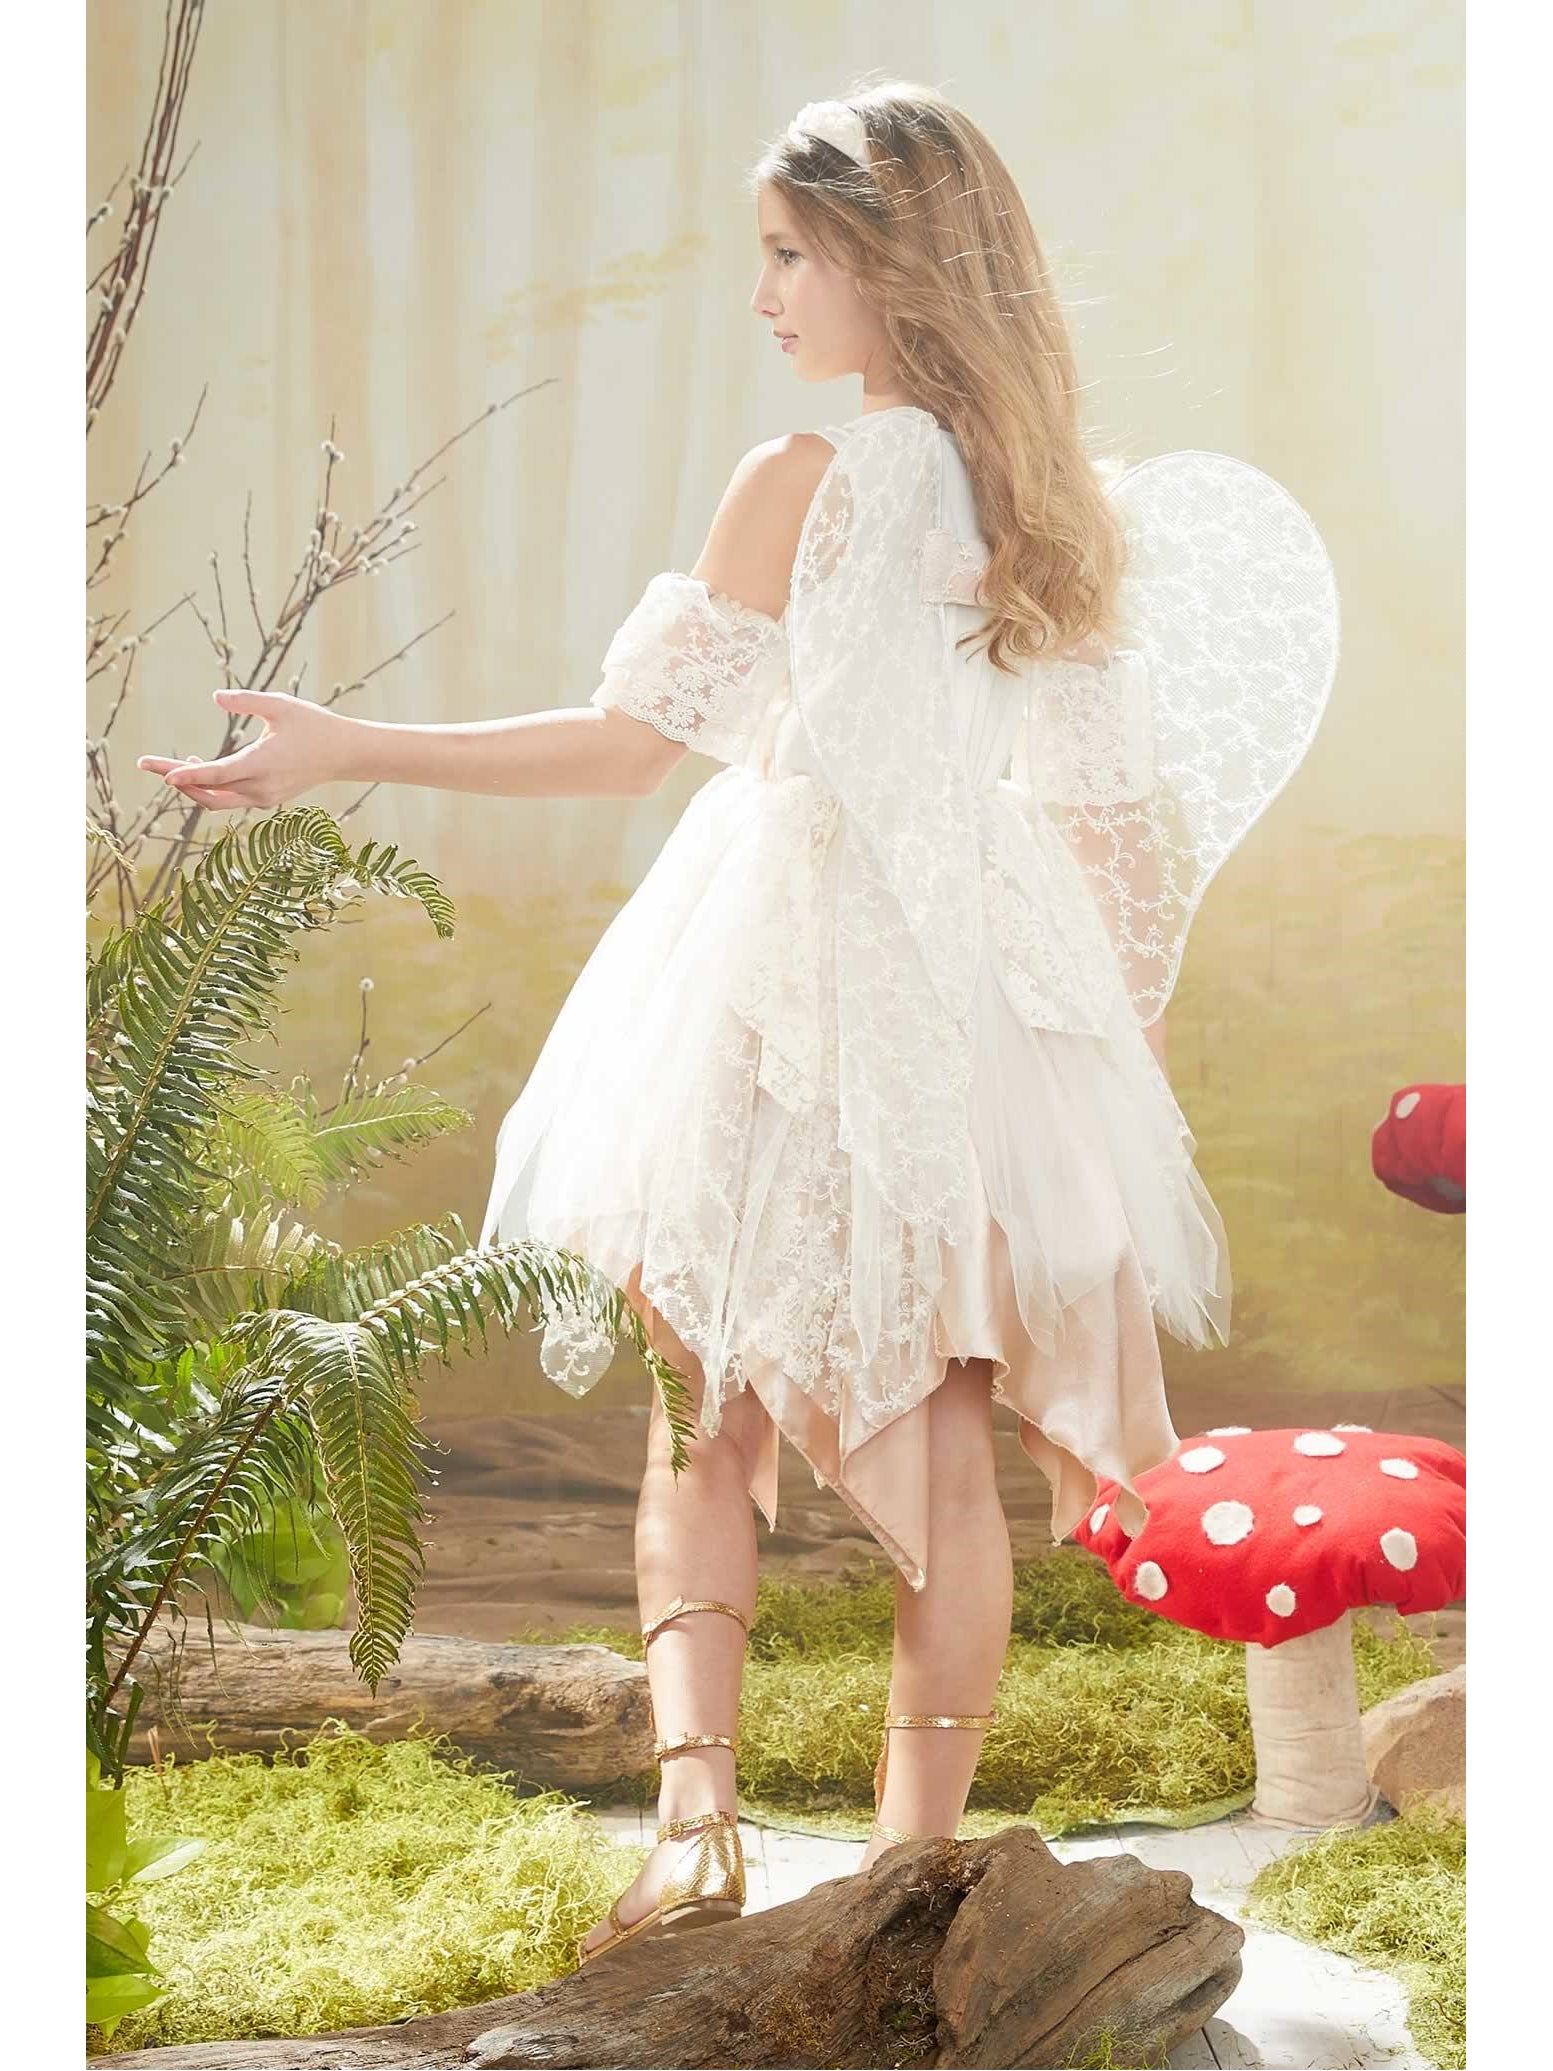 Fairy costume | Stuff for Sale - Gumtree